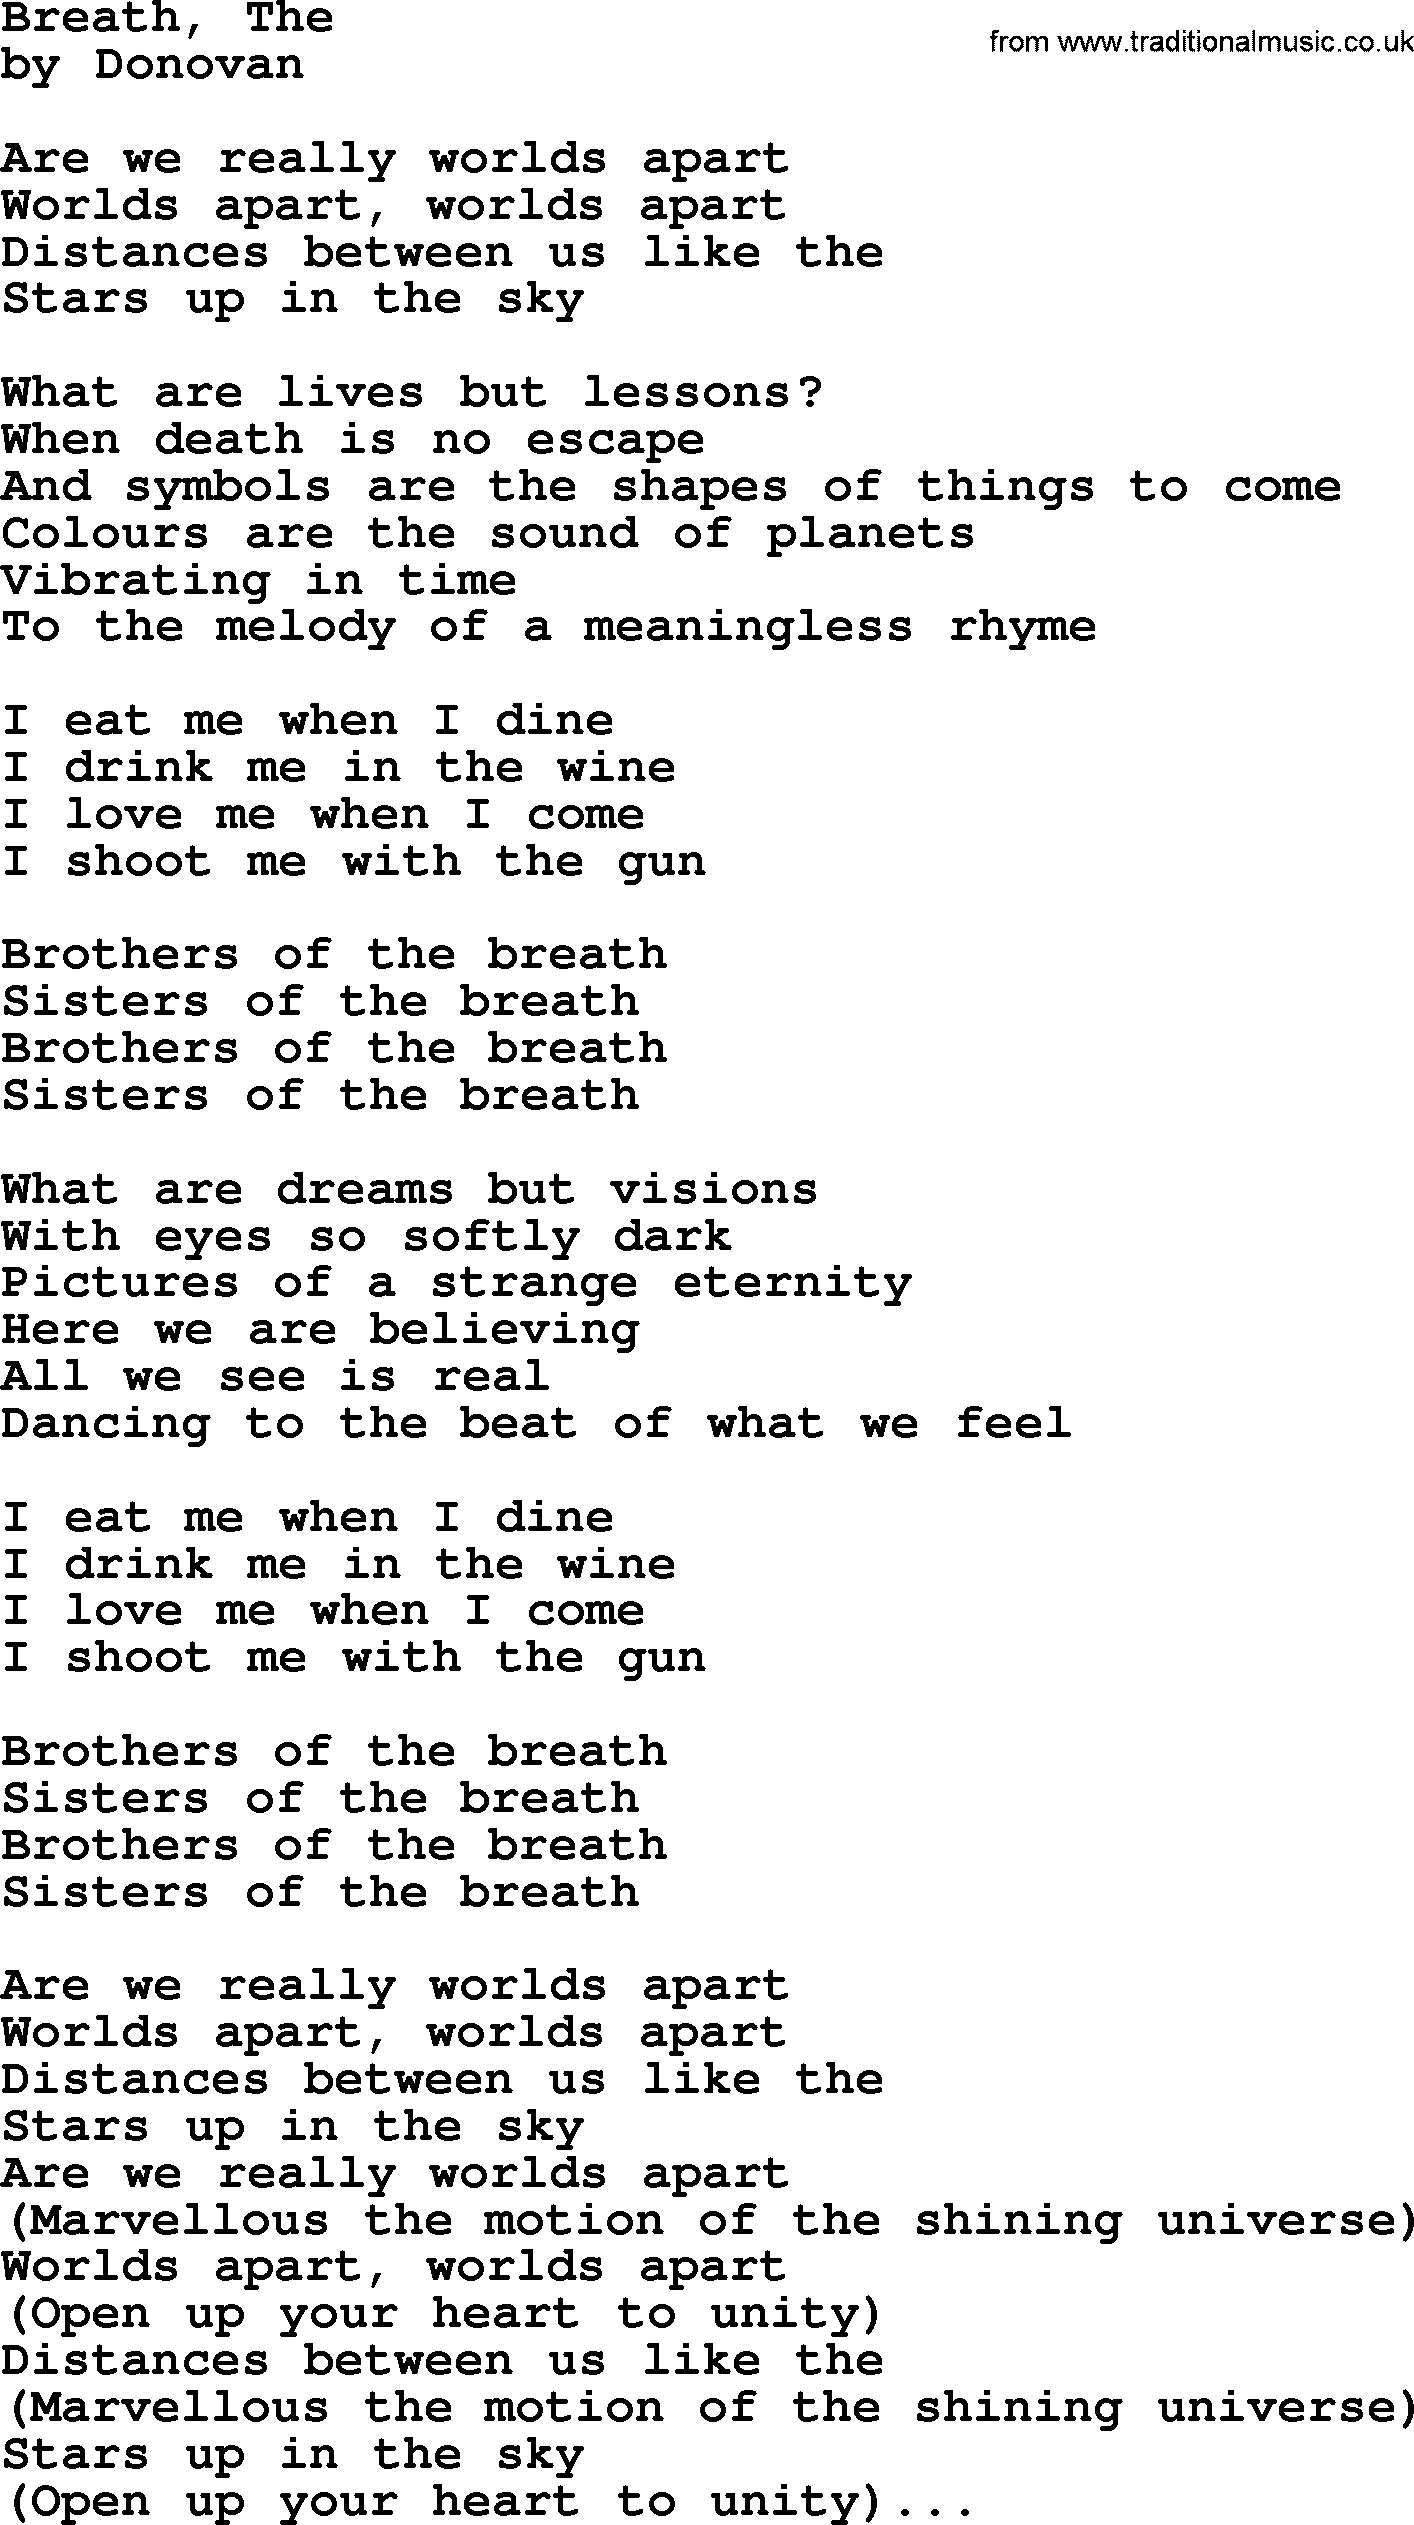 Donovan Leitch song: Breath, The lyrics